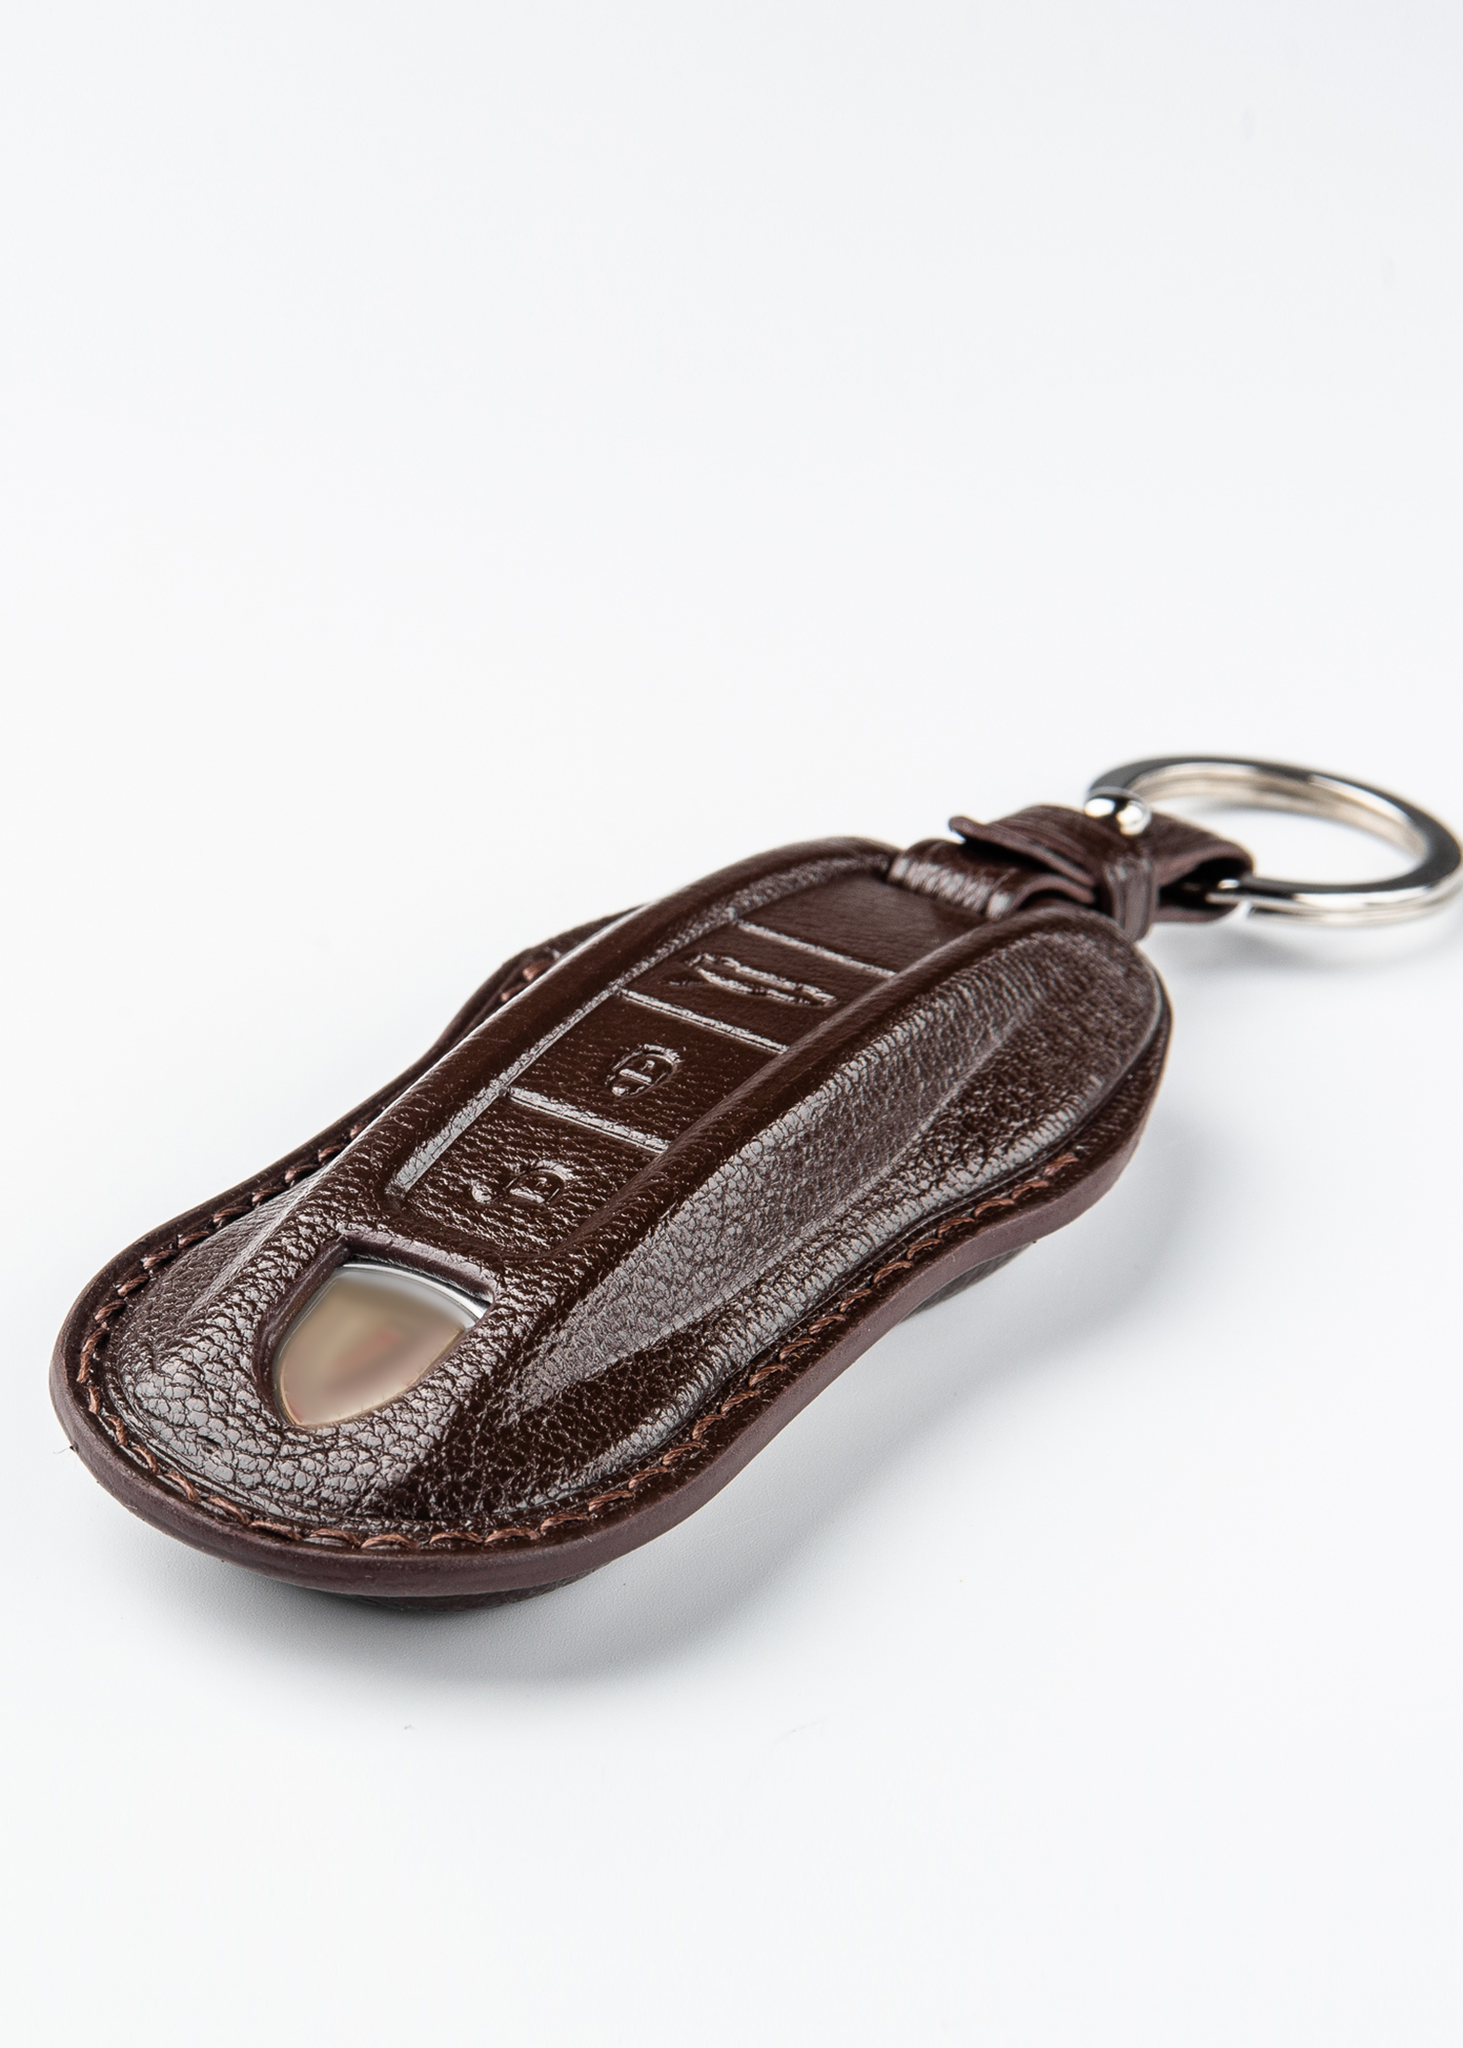 Timotheus for Porsche key fob cover case, Compatible with Porsche key case, Handmade Genuine Leather for Porsche keychains | PR44